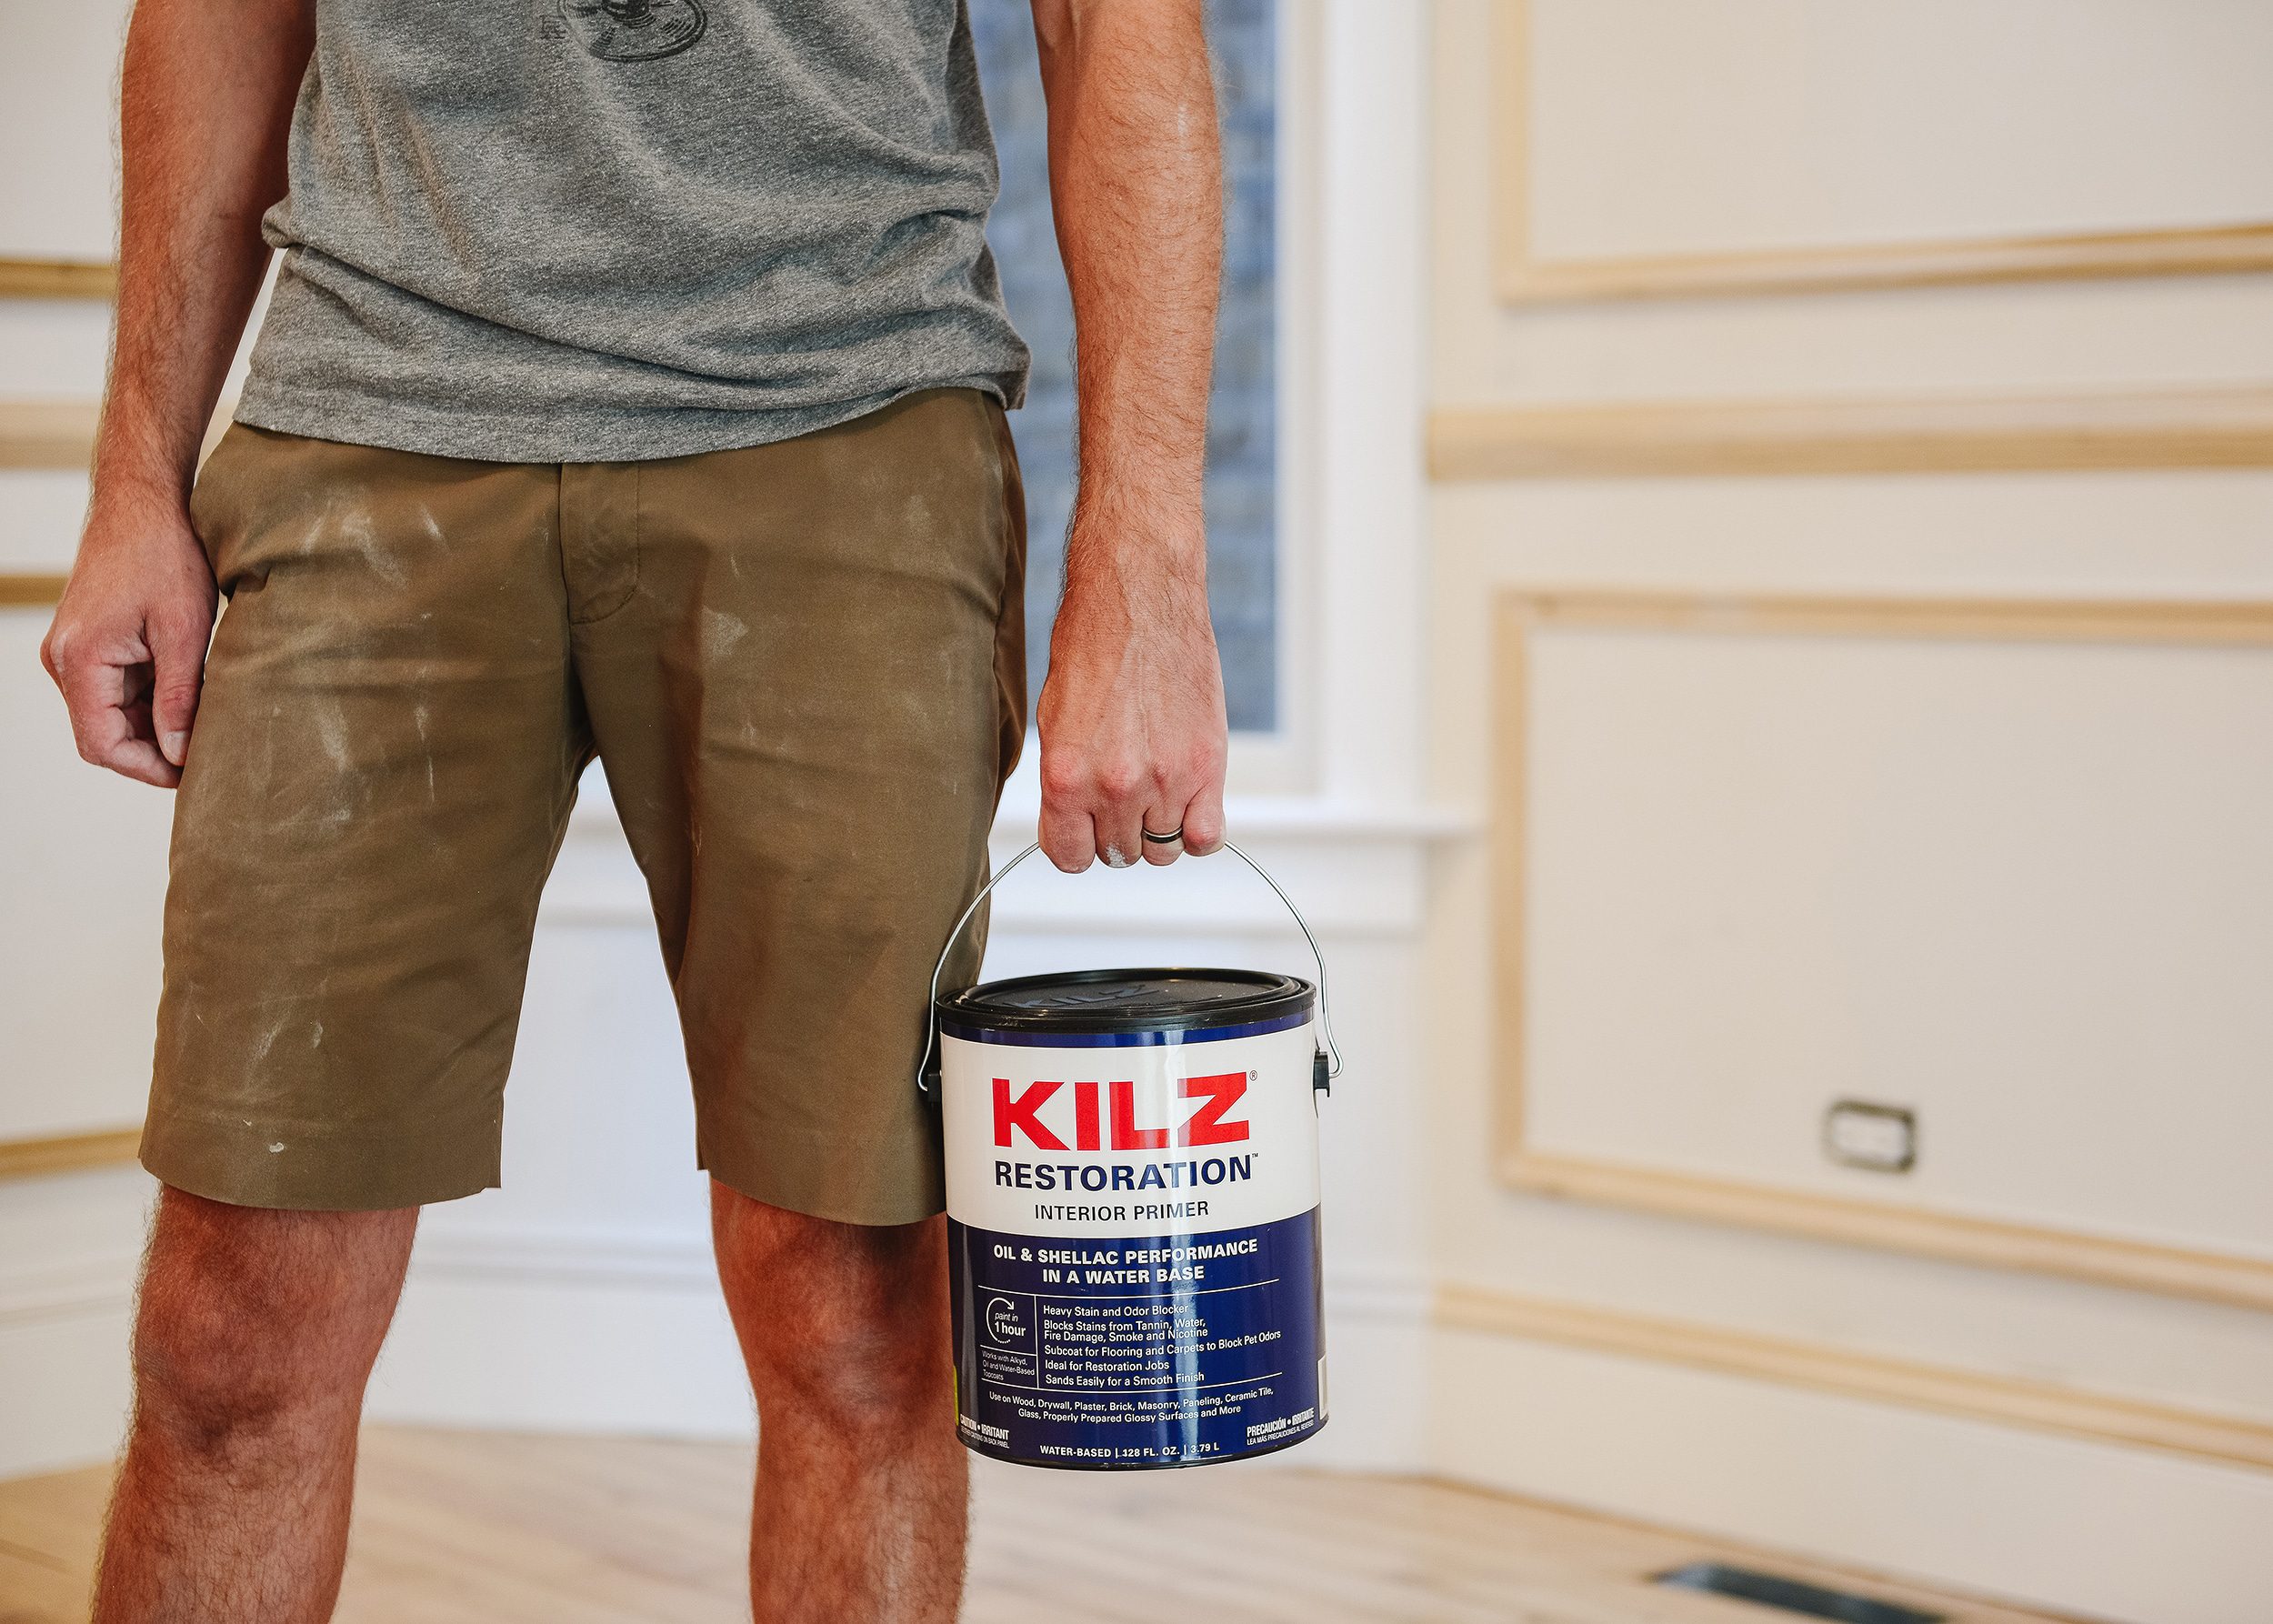 Kilz Restoration primer for the DIY panel molding in the dining room | via Yellow Brick Home